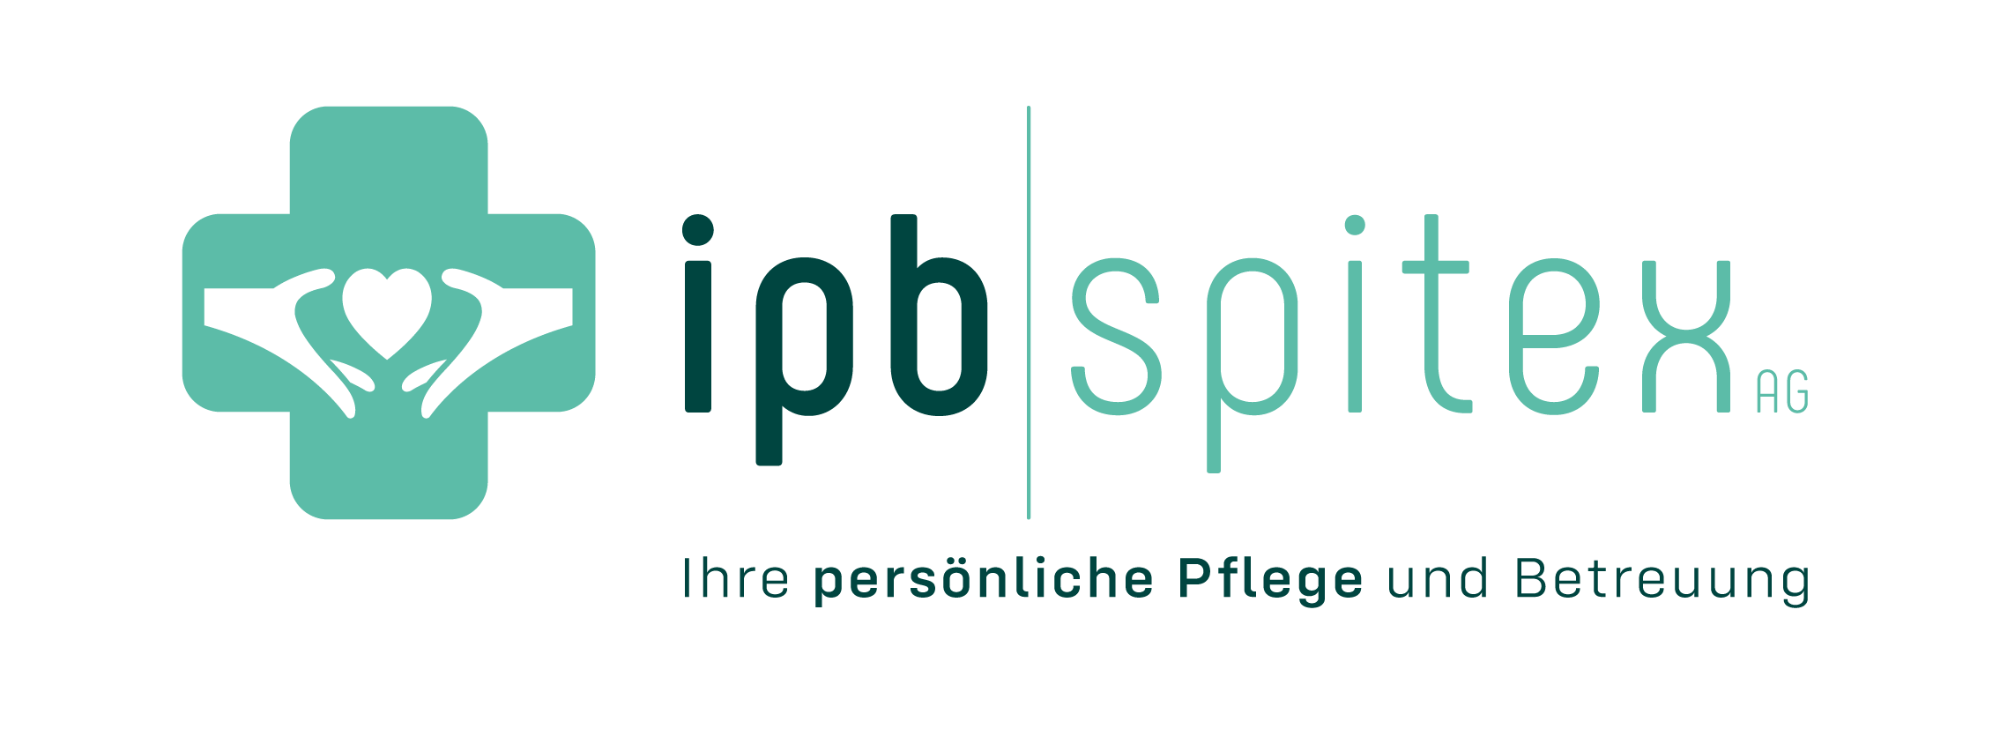 Logo IPB Spitex AG